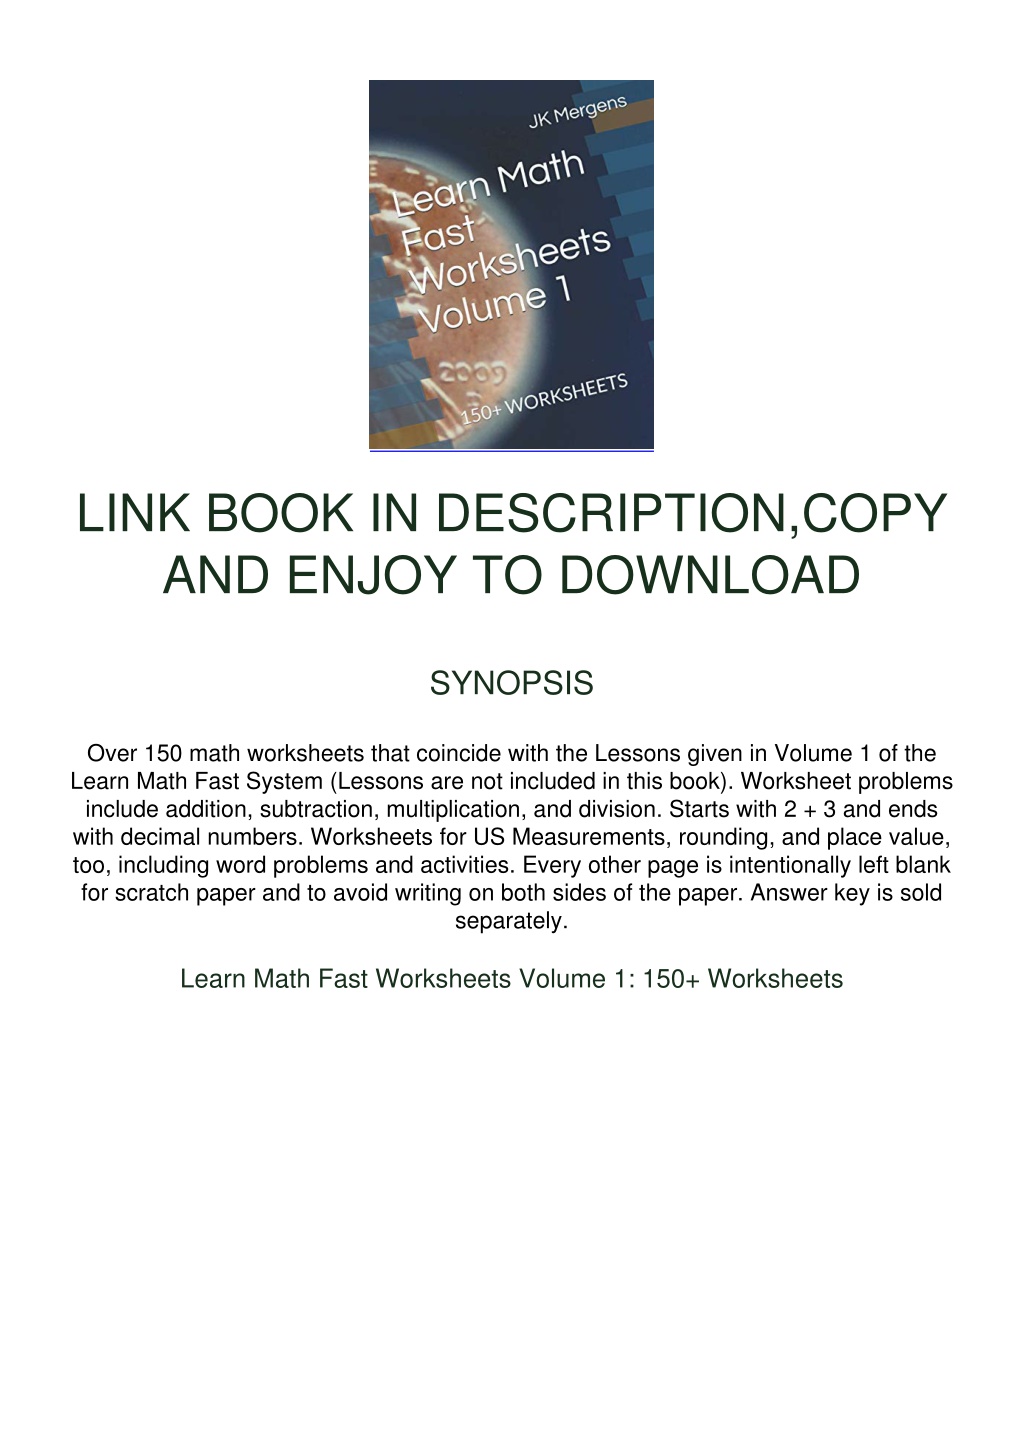 ppt-pdf-download-learn-math-fast-worksheets-volume-1-150